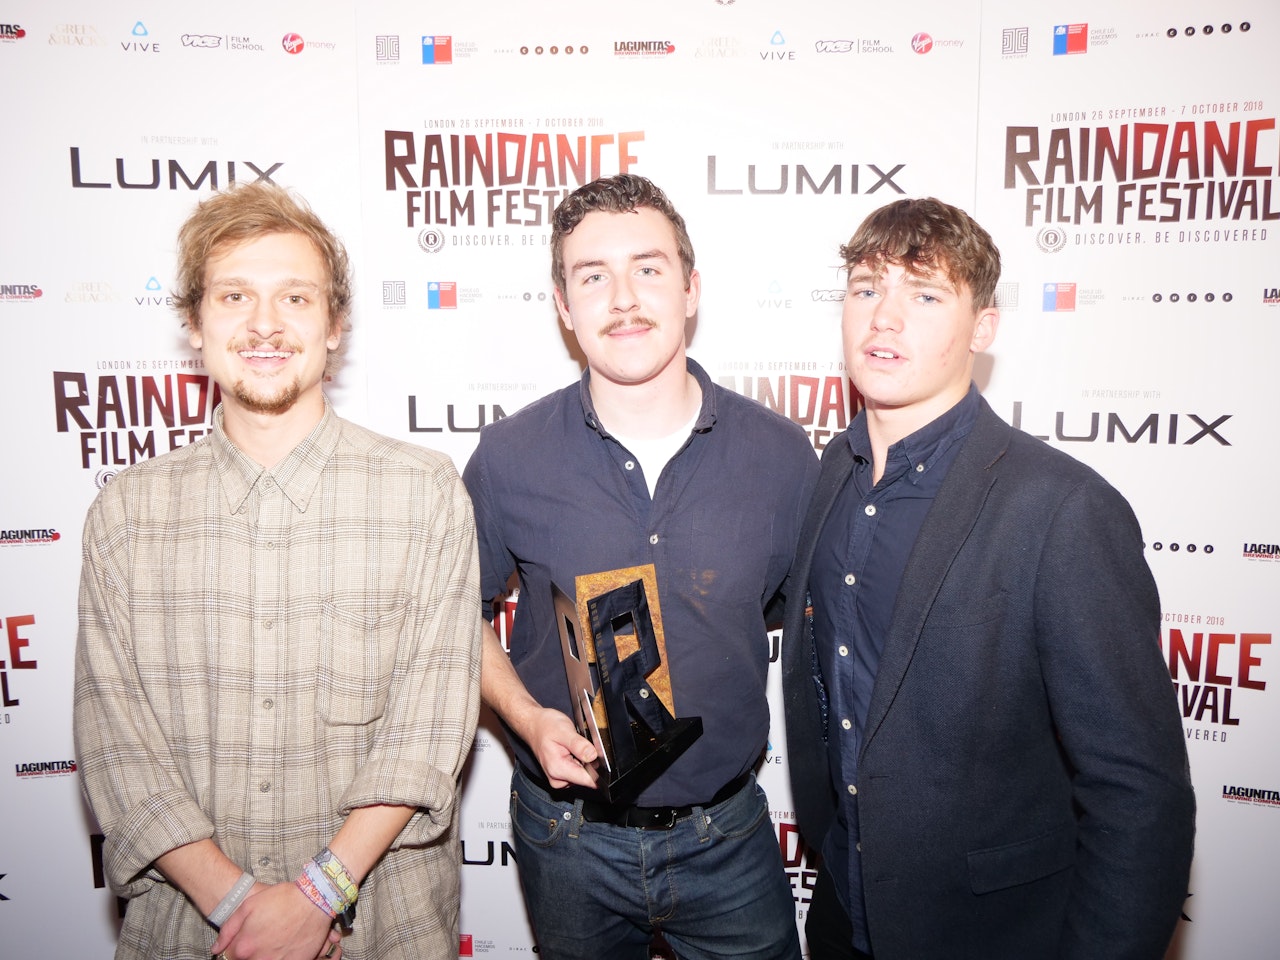 Raindance Festival comments on Aaron Dunleavy's Landsharks Best UK Short win